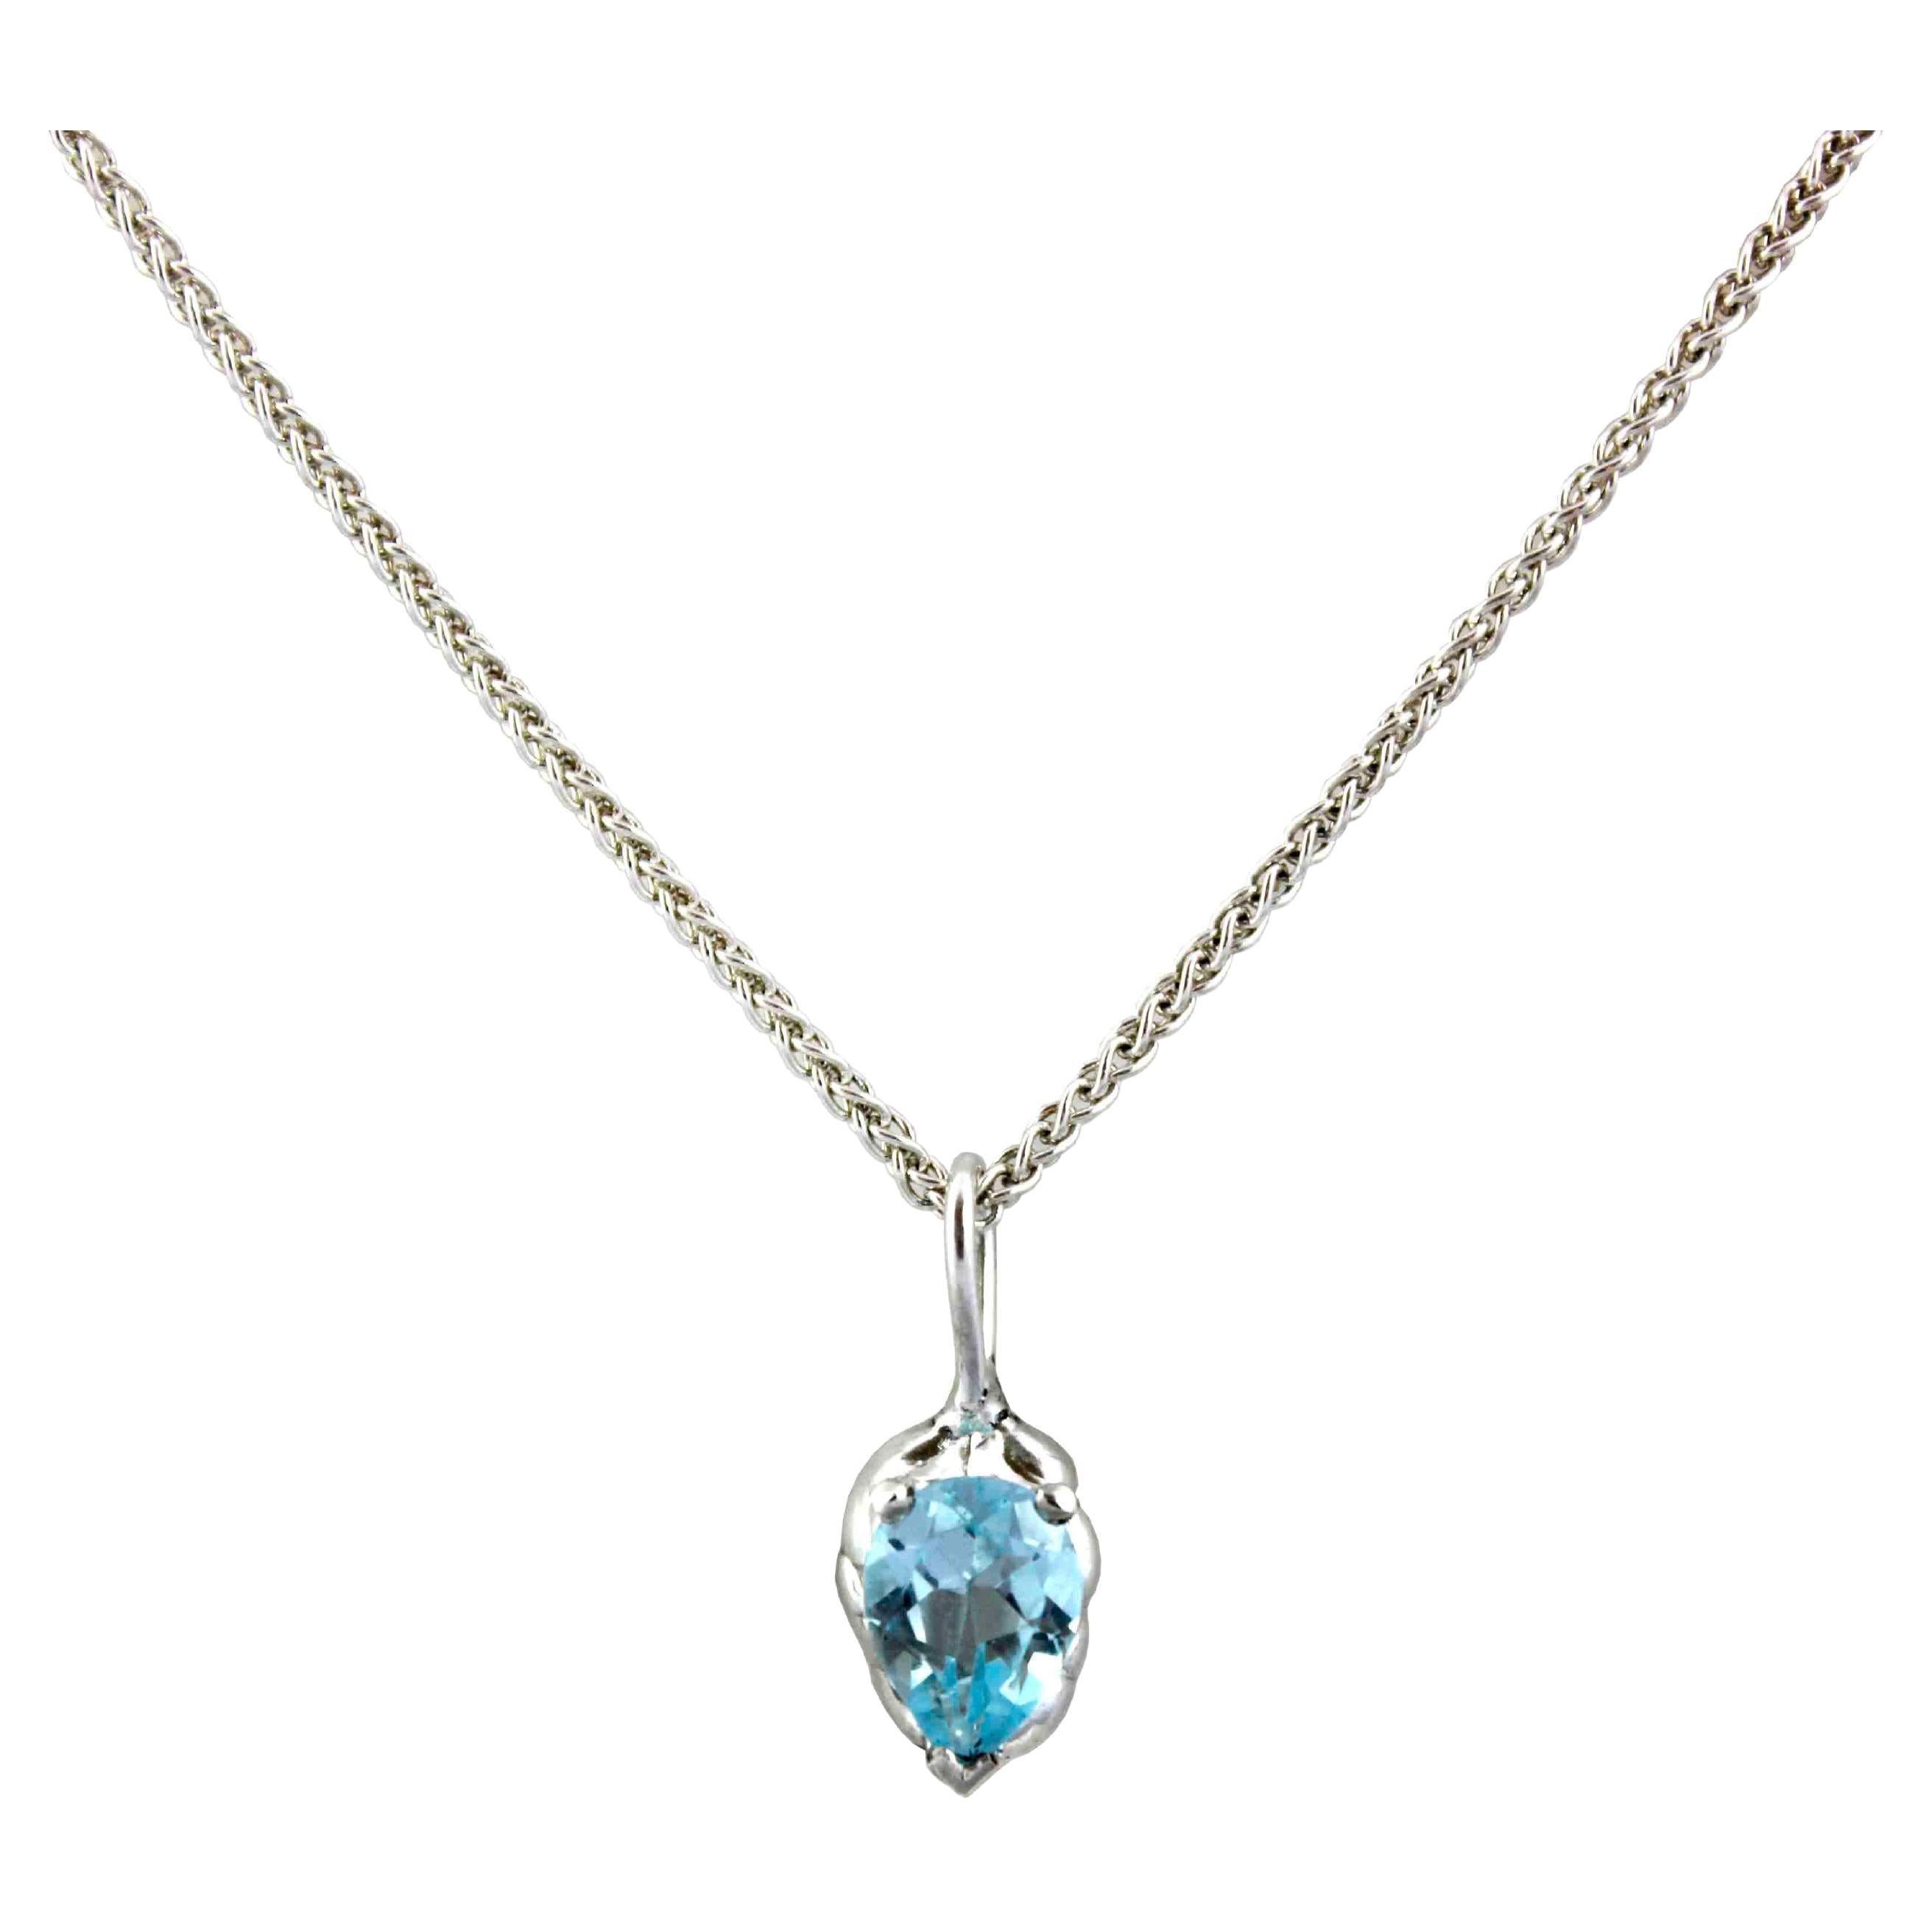  Delicate Blue Topaz Necklace For Sale